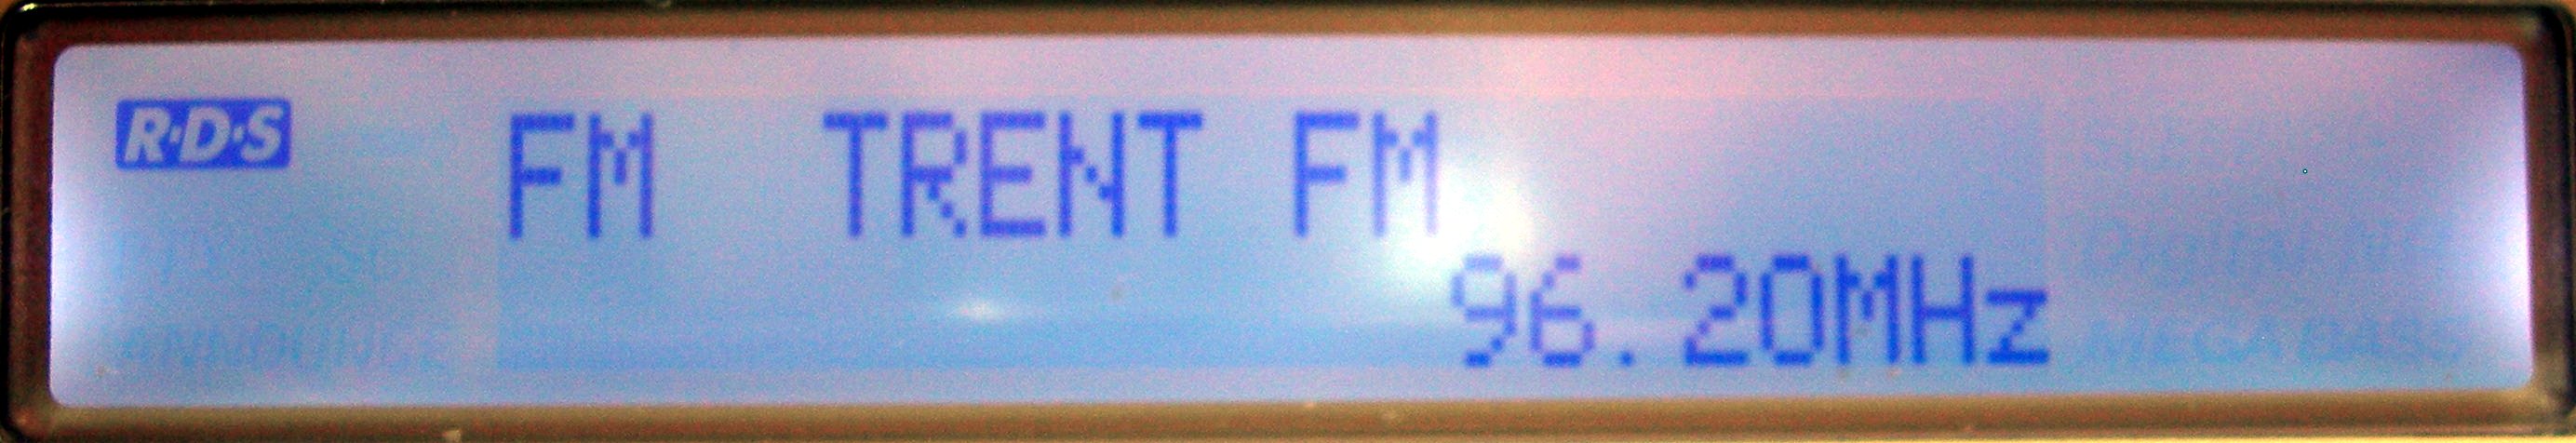 File:Sony CDX-GT420U car radio with PNY USB flash drive.jpg - Wikipedia